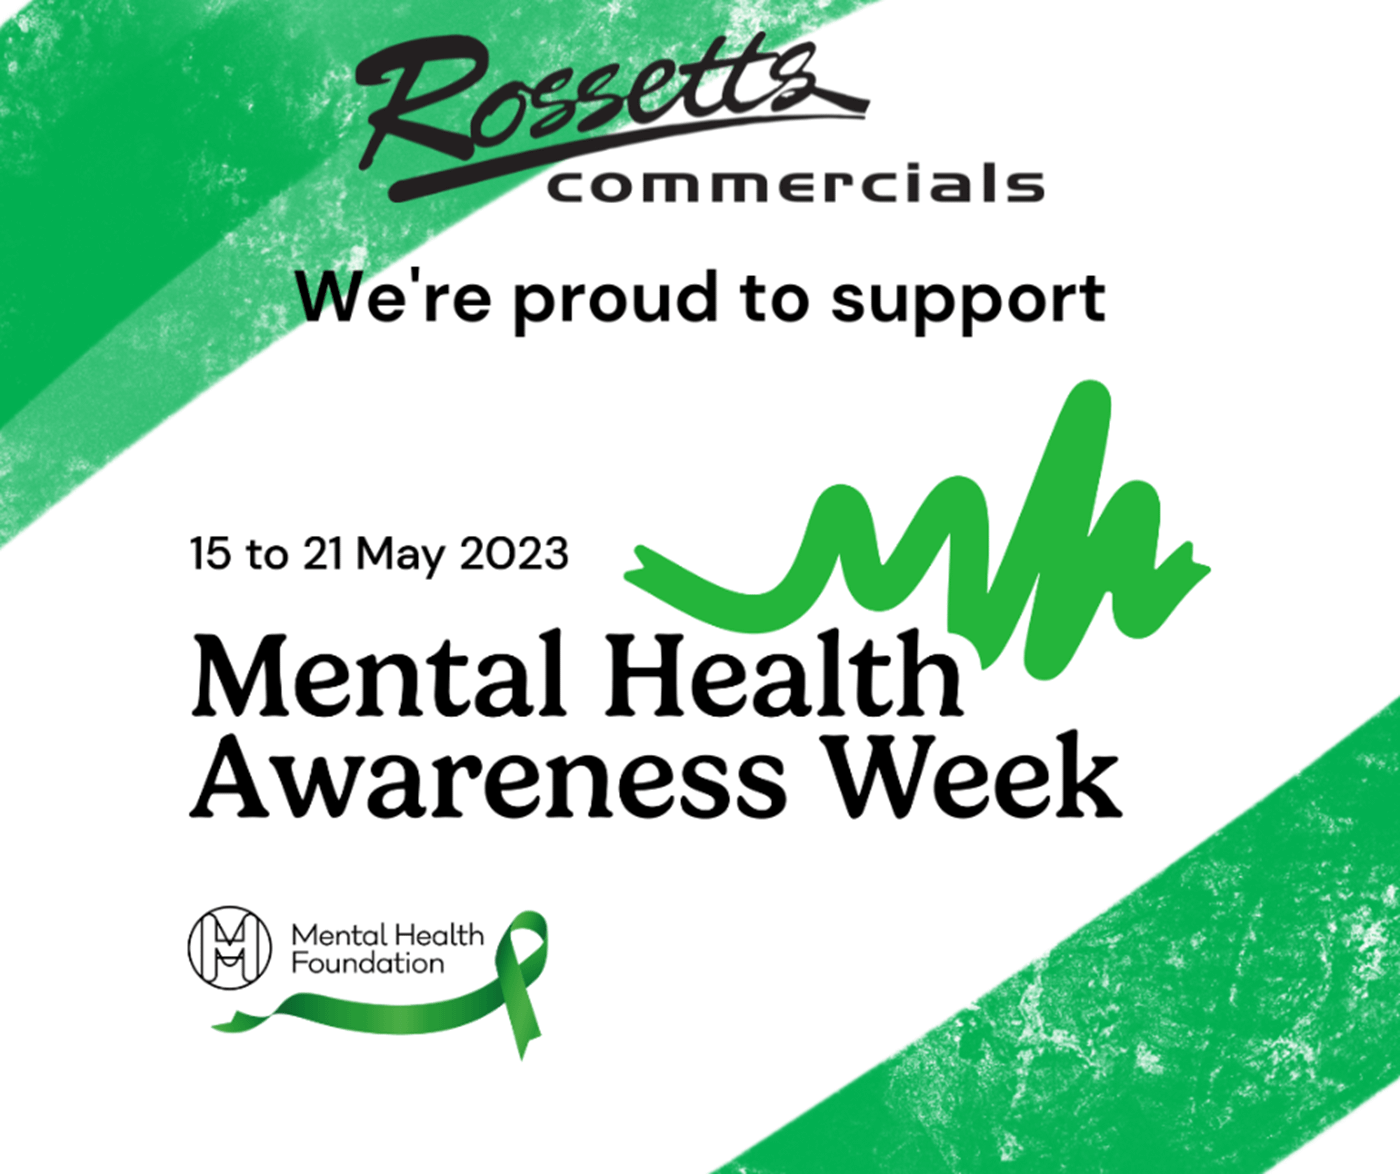 Rossetts Commercials is marking Mental Health Awareness Week 